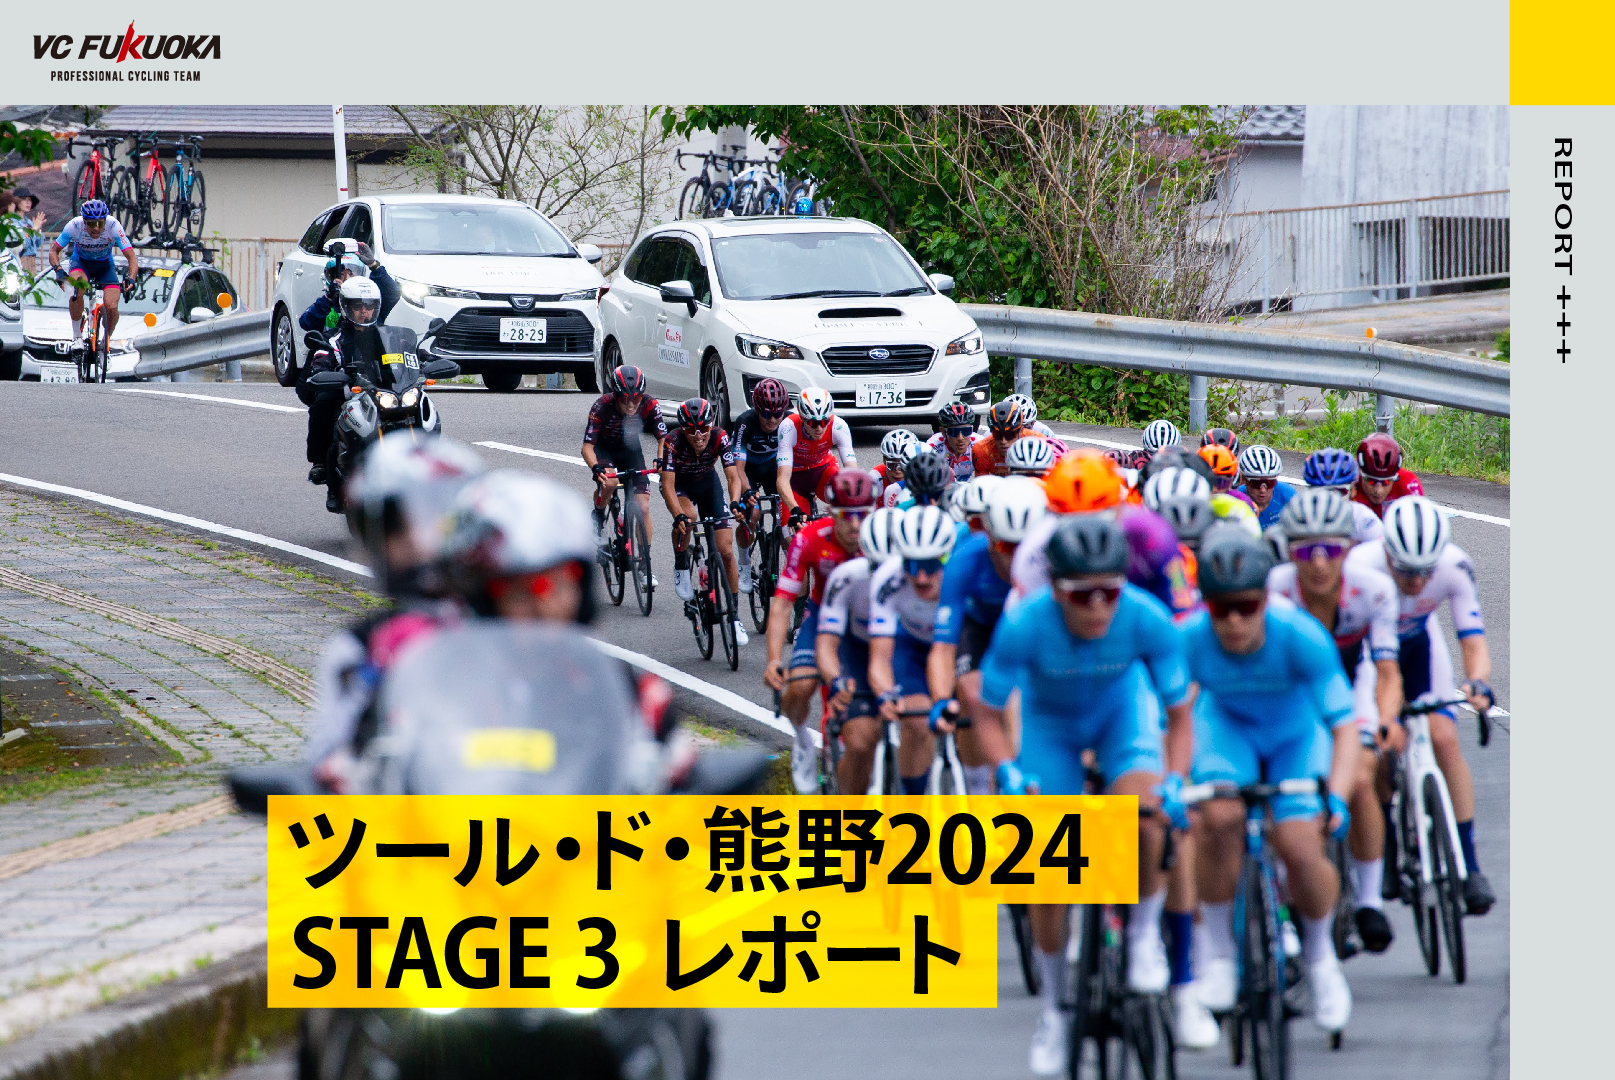 5/12 TOUR de 熊野2024 STAGE 3 レポート